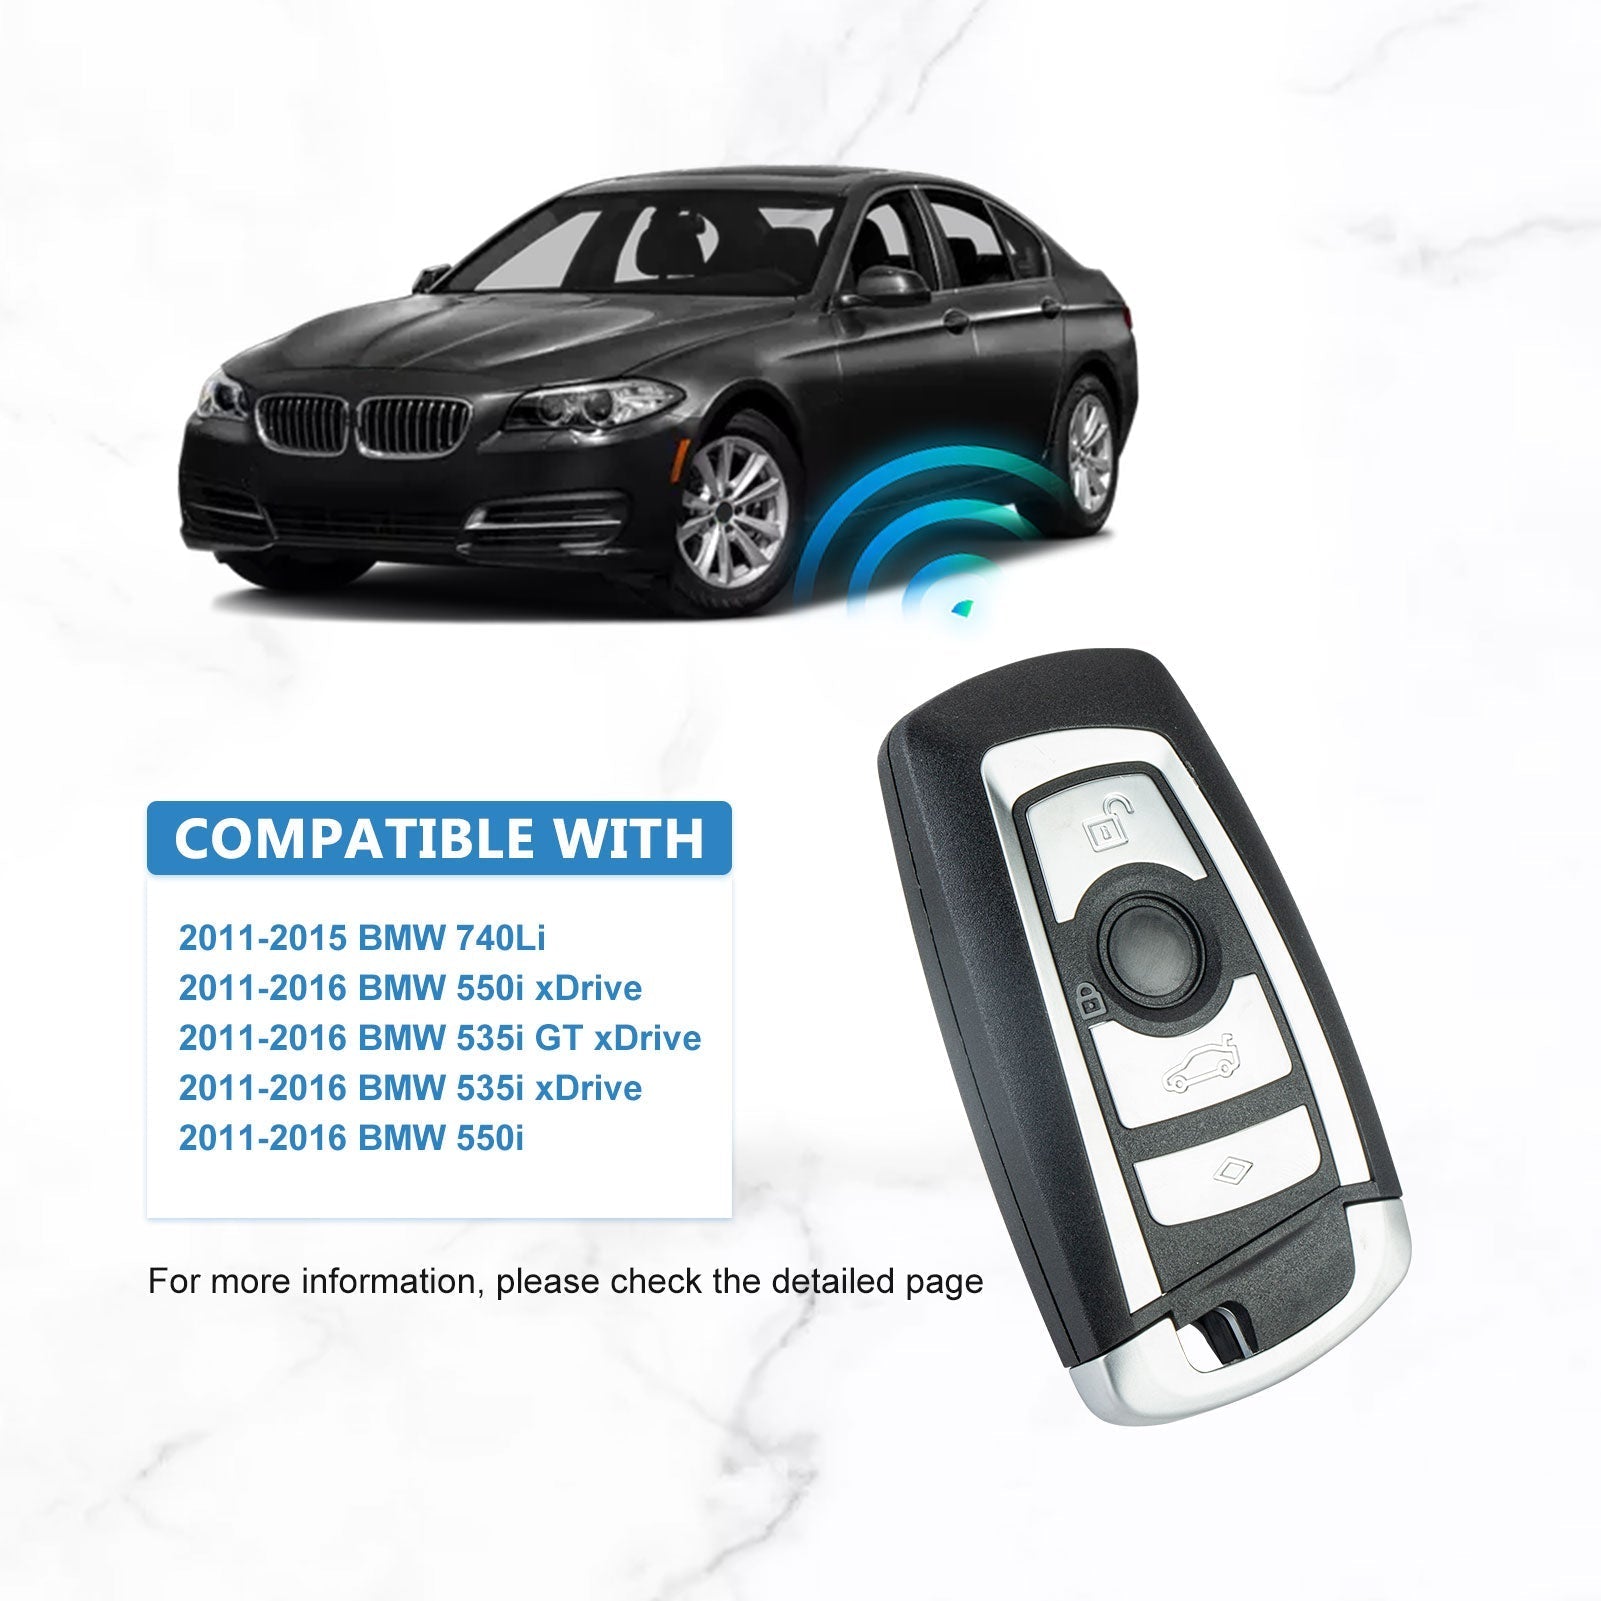 Keyless Entry Car Key Fob 315Mhz Replacement for 2010-2015 750Li/2010-2015 750Li xDrive/2010-2015 750Li/2010-2015 750Li xDrive KR55WK49863   KR-B4RB-10